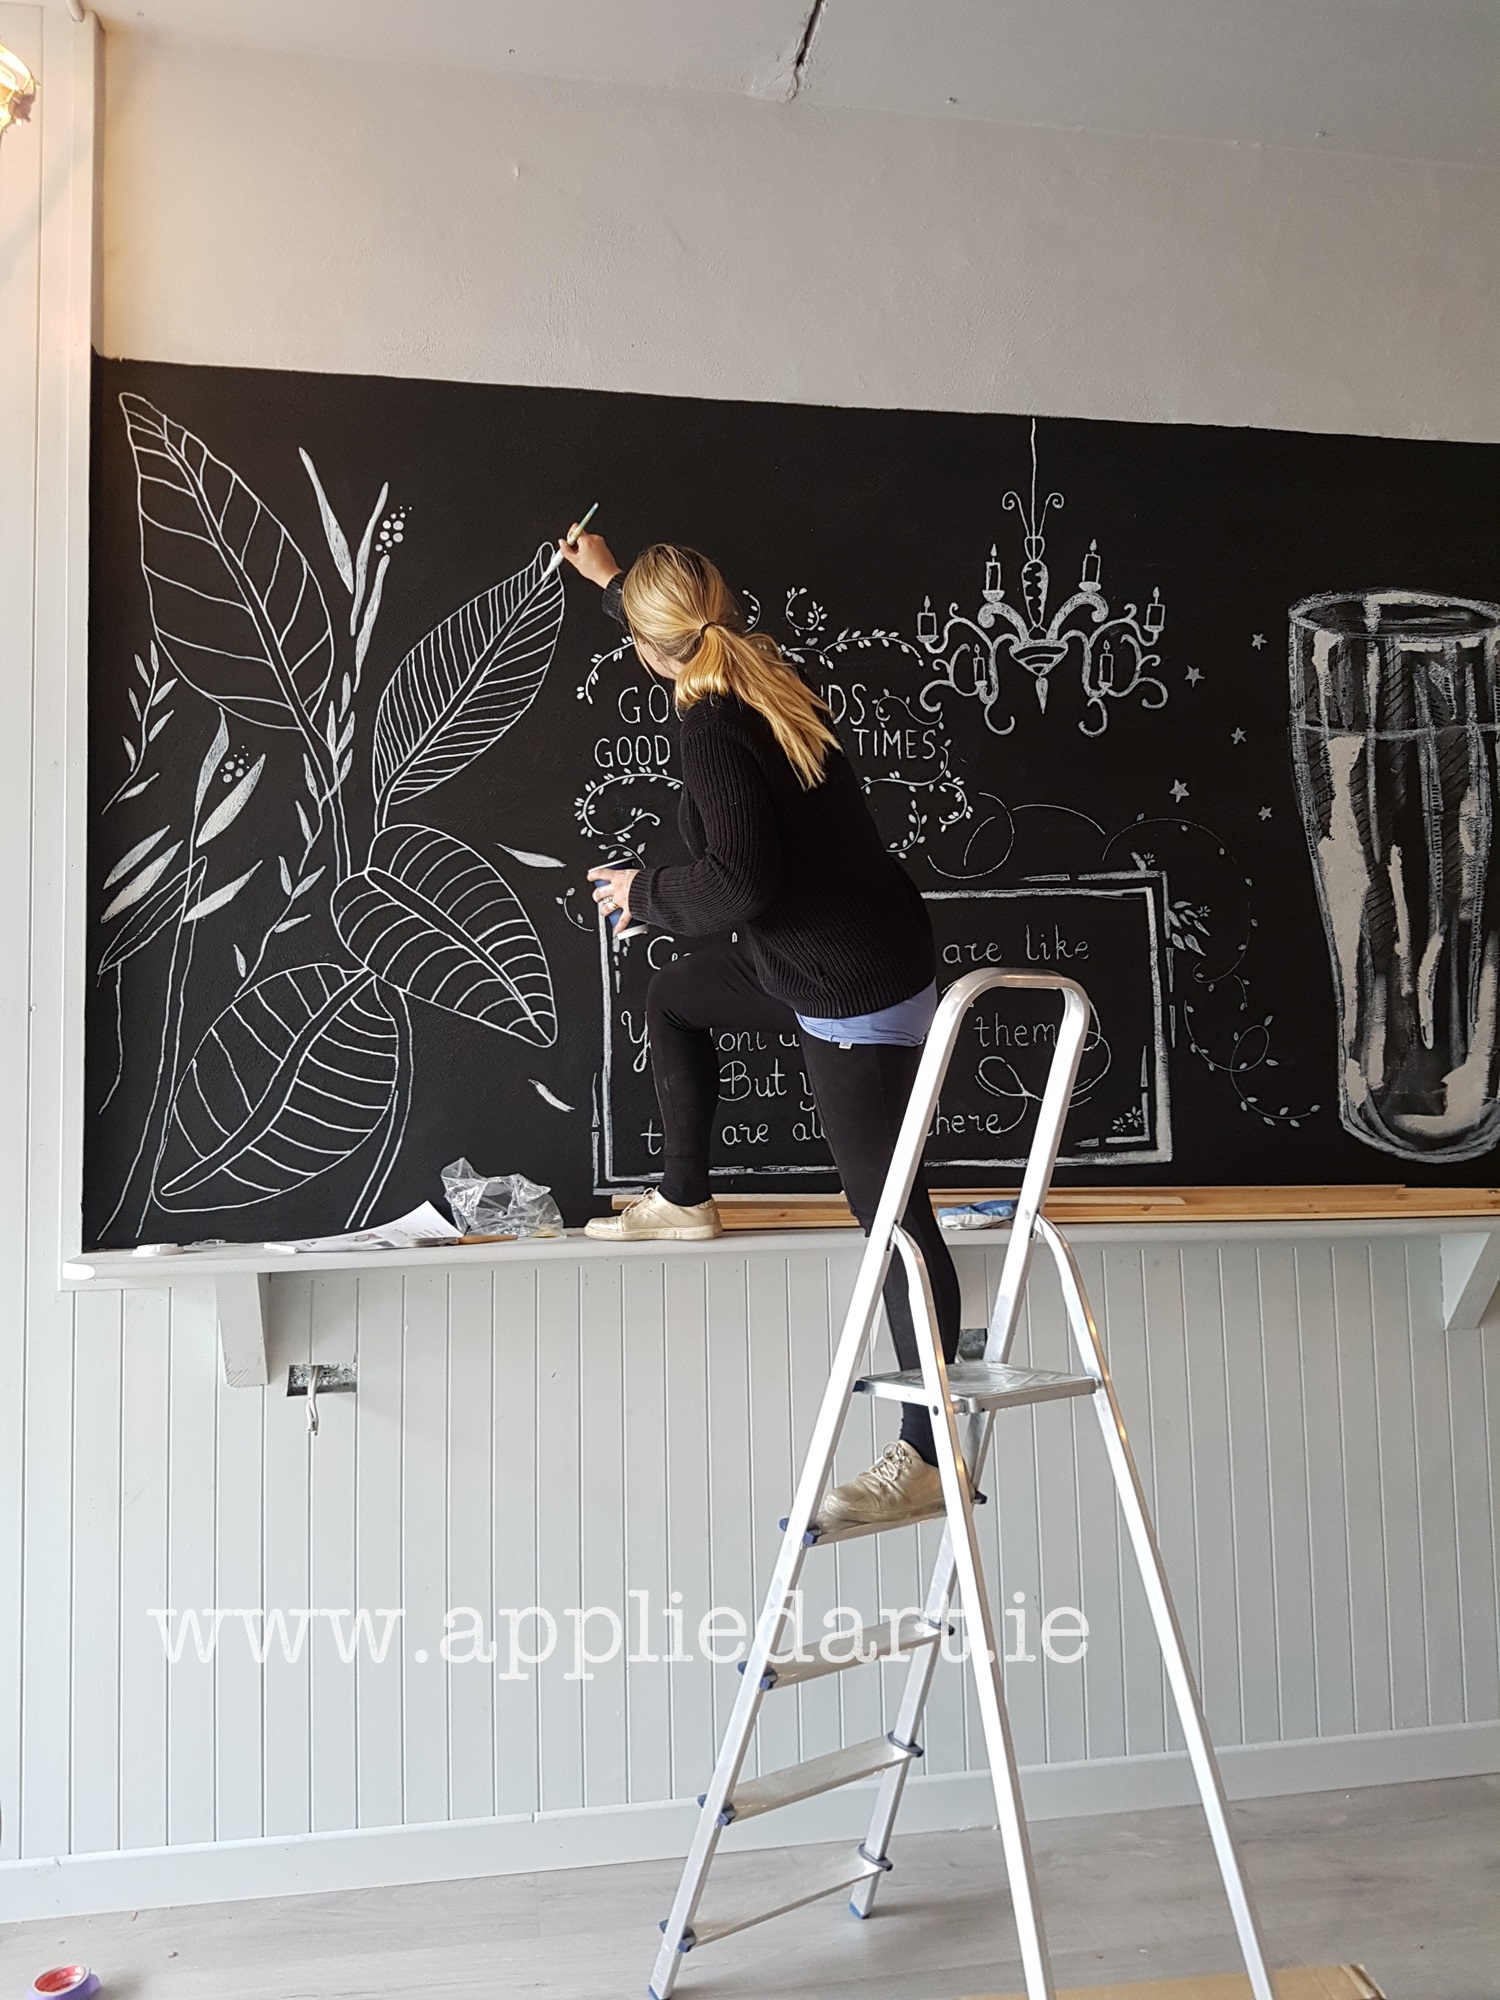 aKlaudia Byrne Applied Art chalk art cafe nwetown mount kennedy irish artist chalk board commercial art painting chalk branding ireland (17).jpg